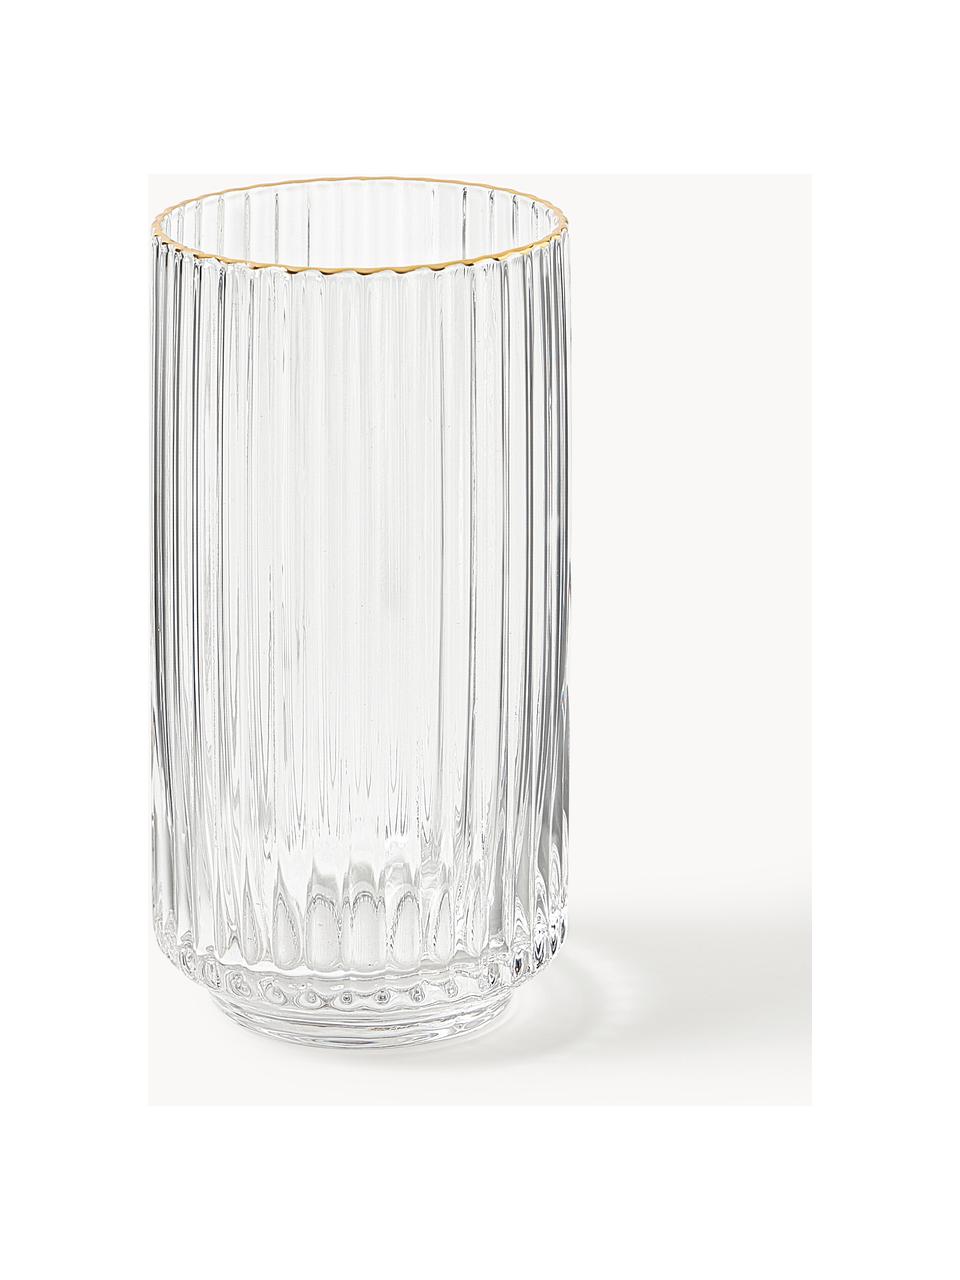 Mondgeblazen longdrinkglas Aleo met goudkleurige rand, 4 stuks, Natronkalkglas, Transparant met goudkleurige rand, Ø 7 x H 14 cm, 430 ml